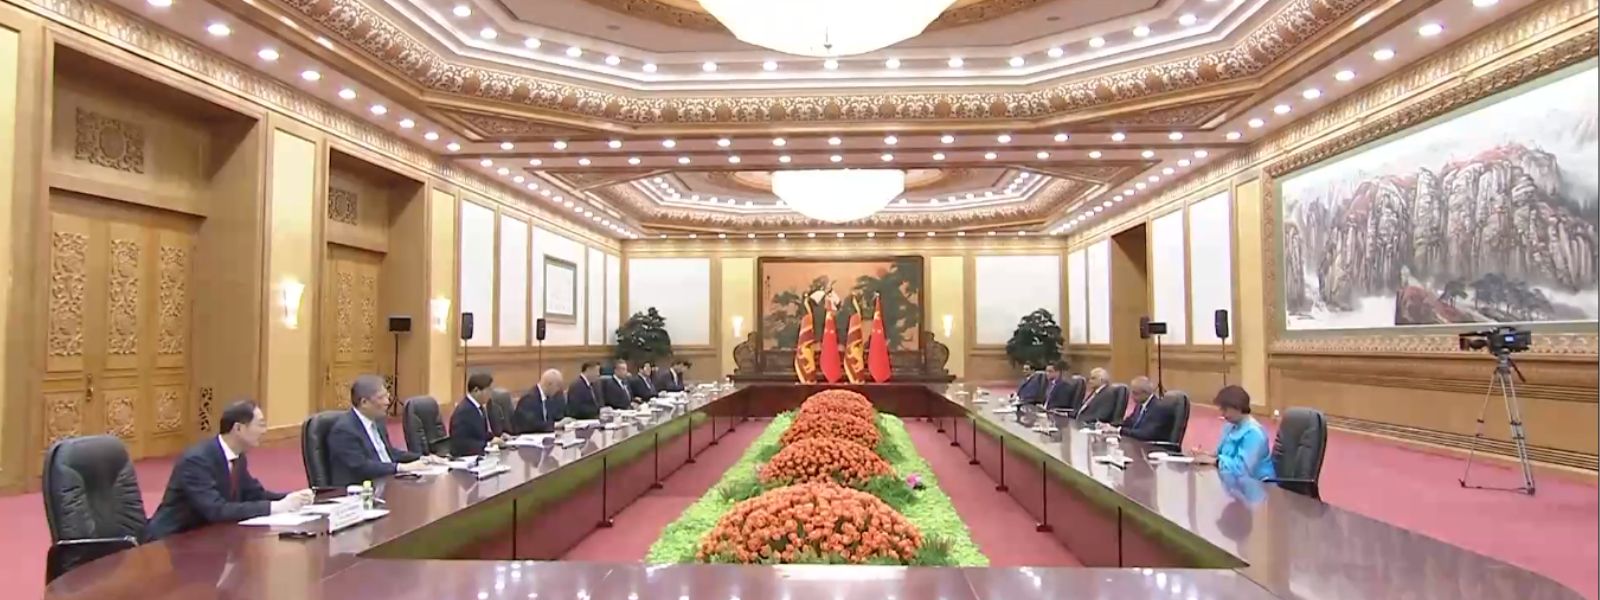 Sri Lanka President meets his Chinese counterpart